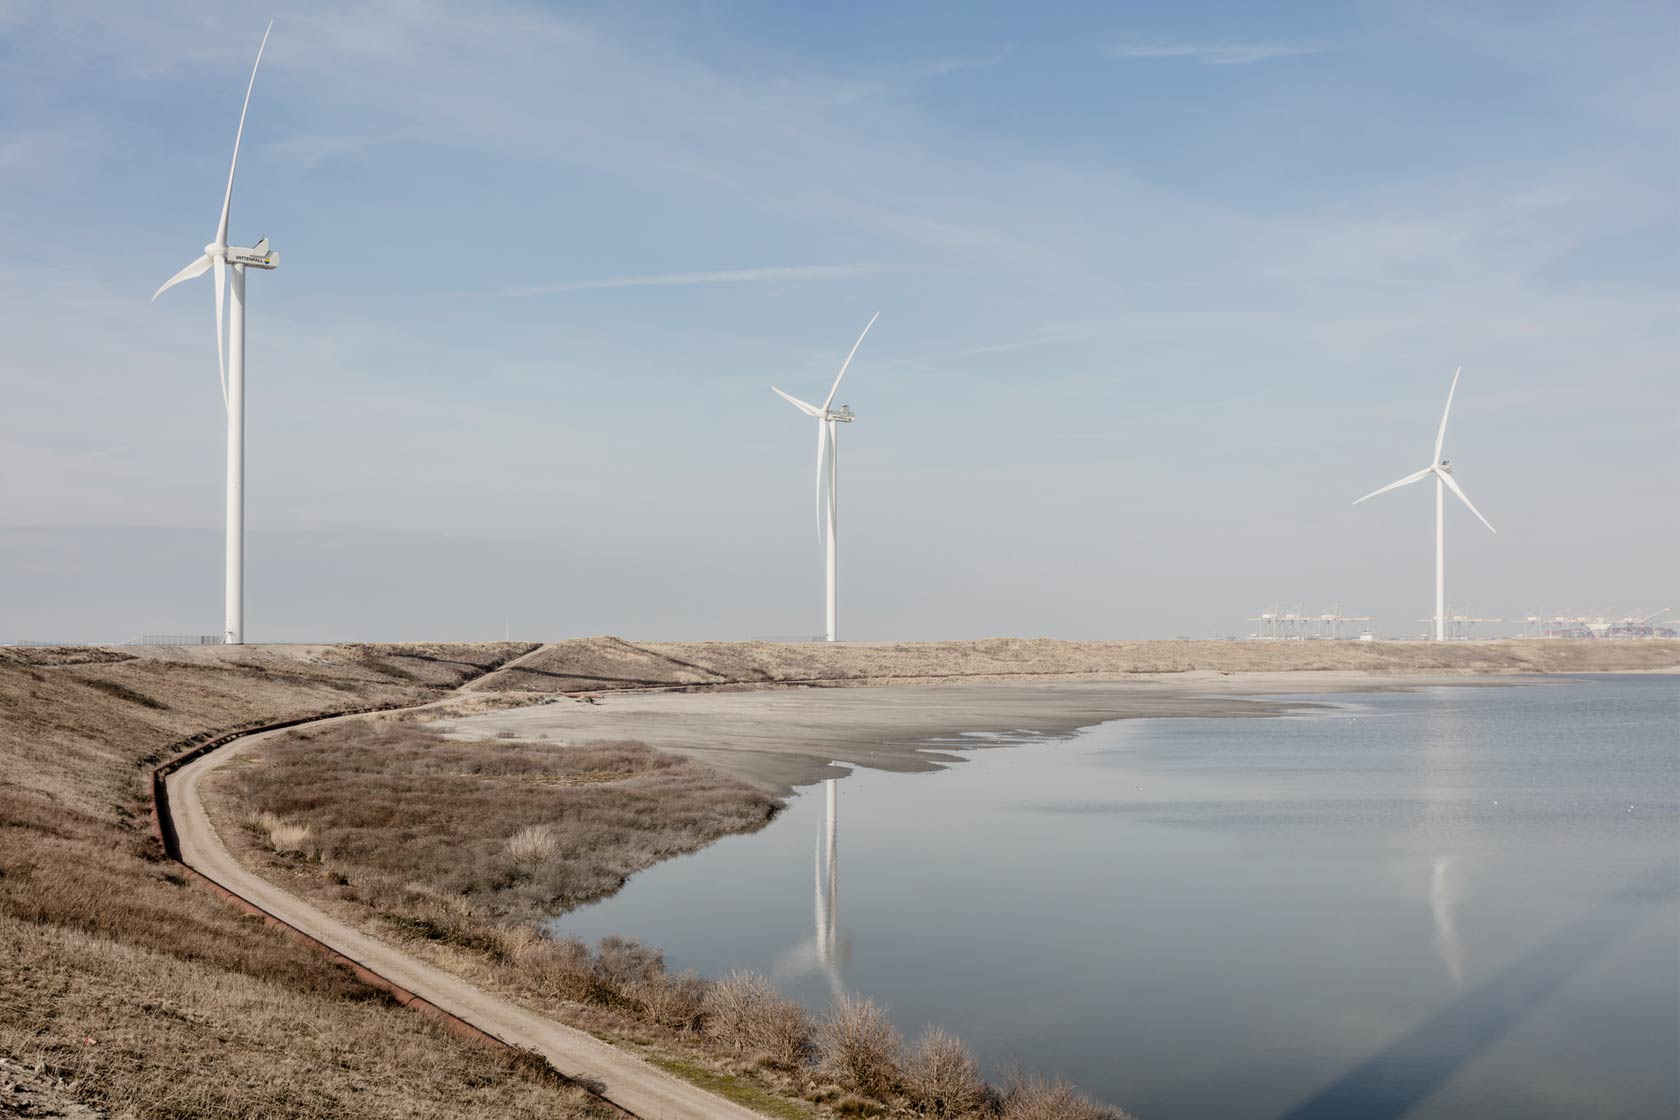 Slufterdam onshore wind farm in the Netherlands